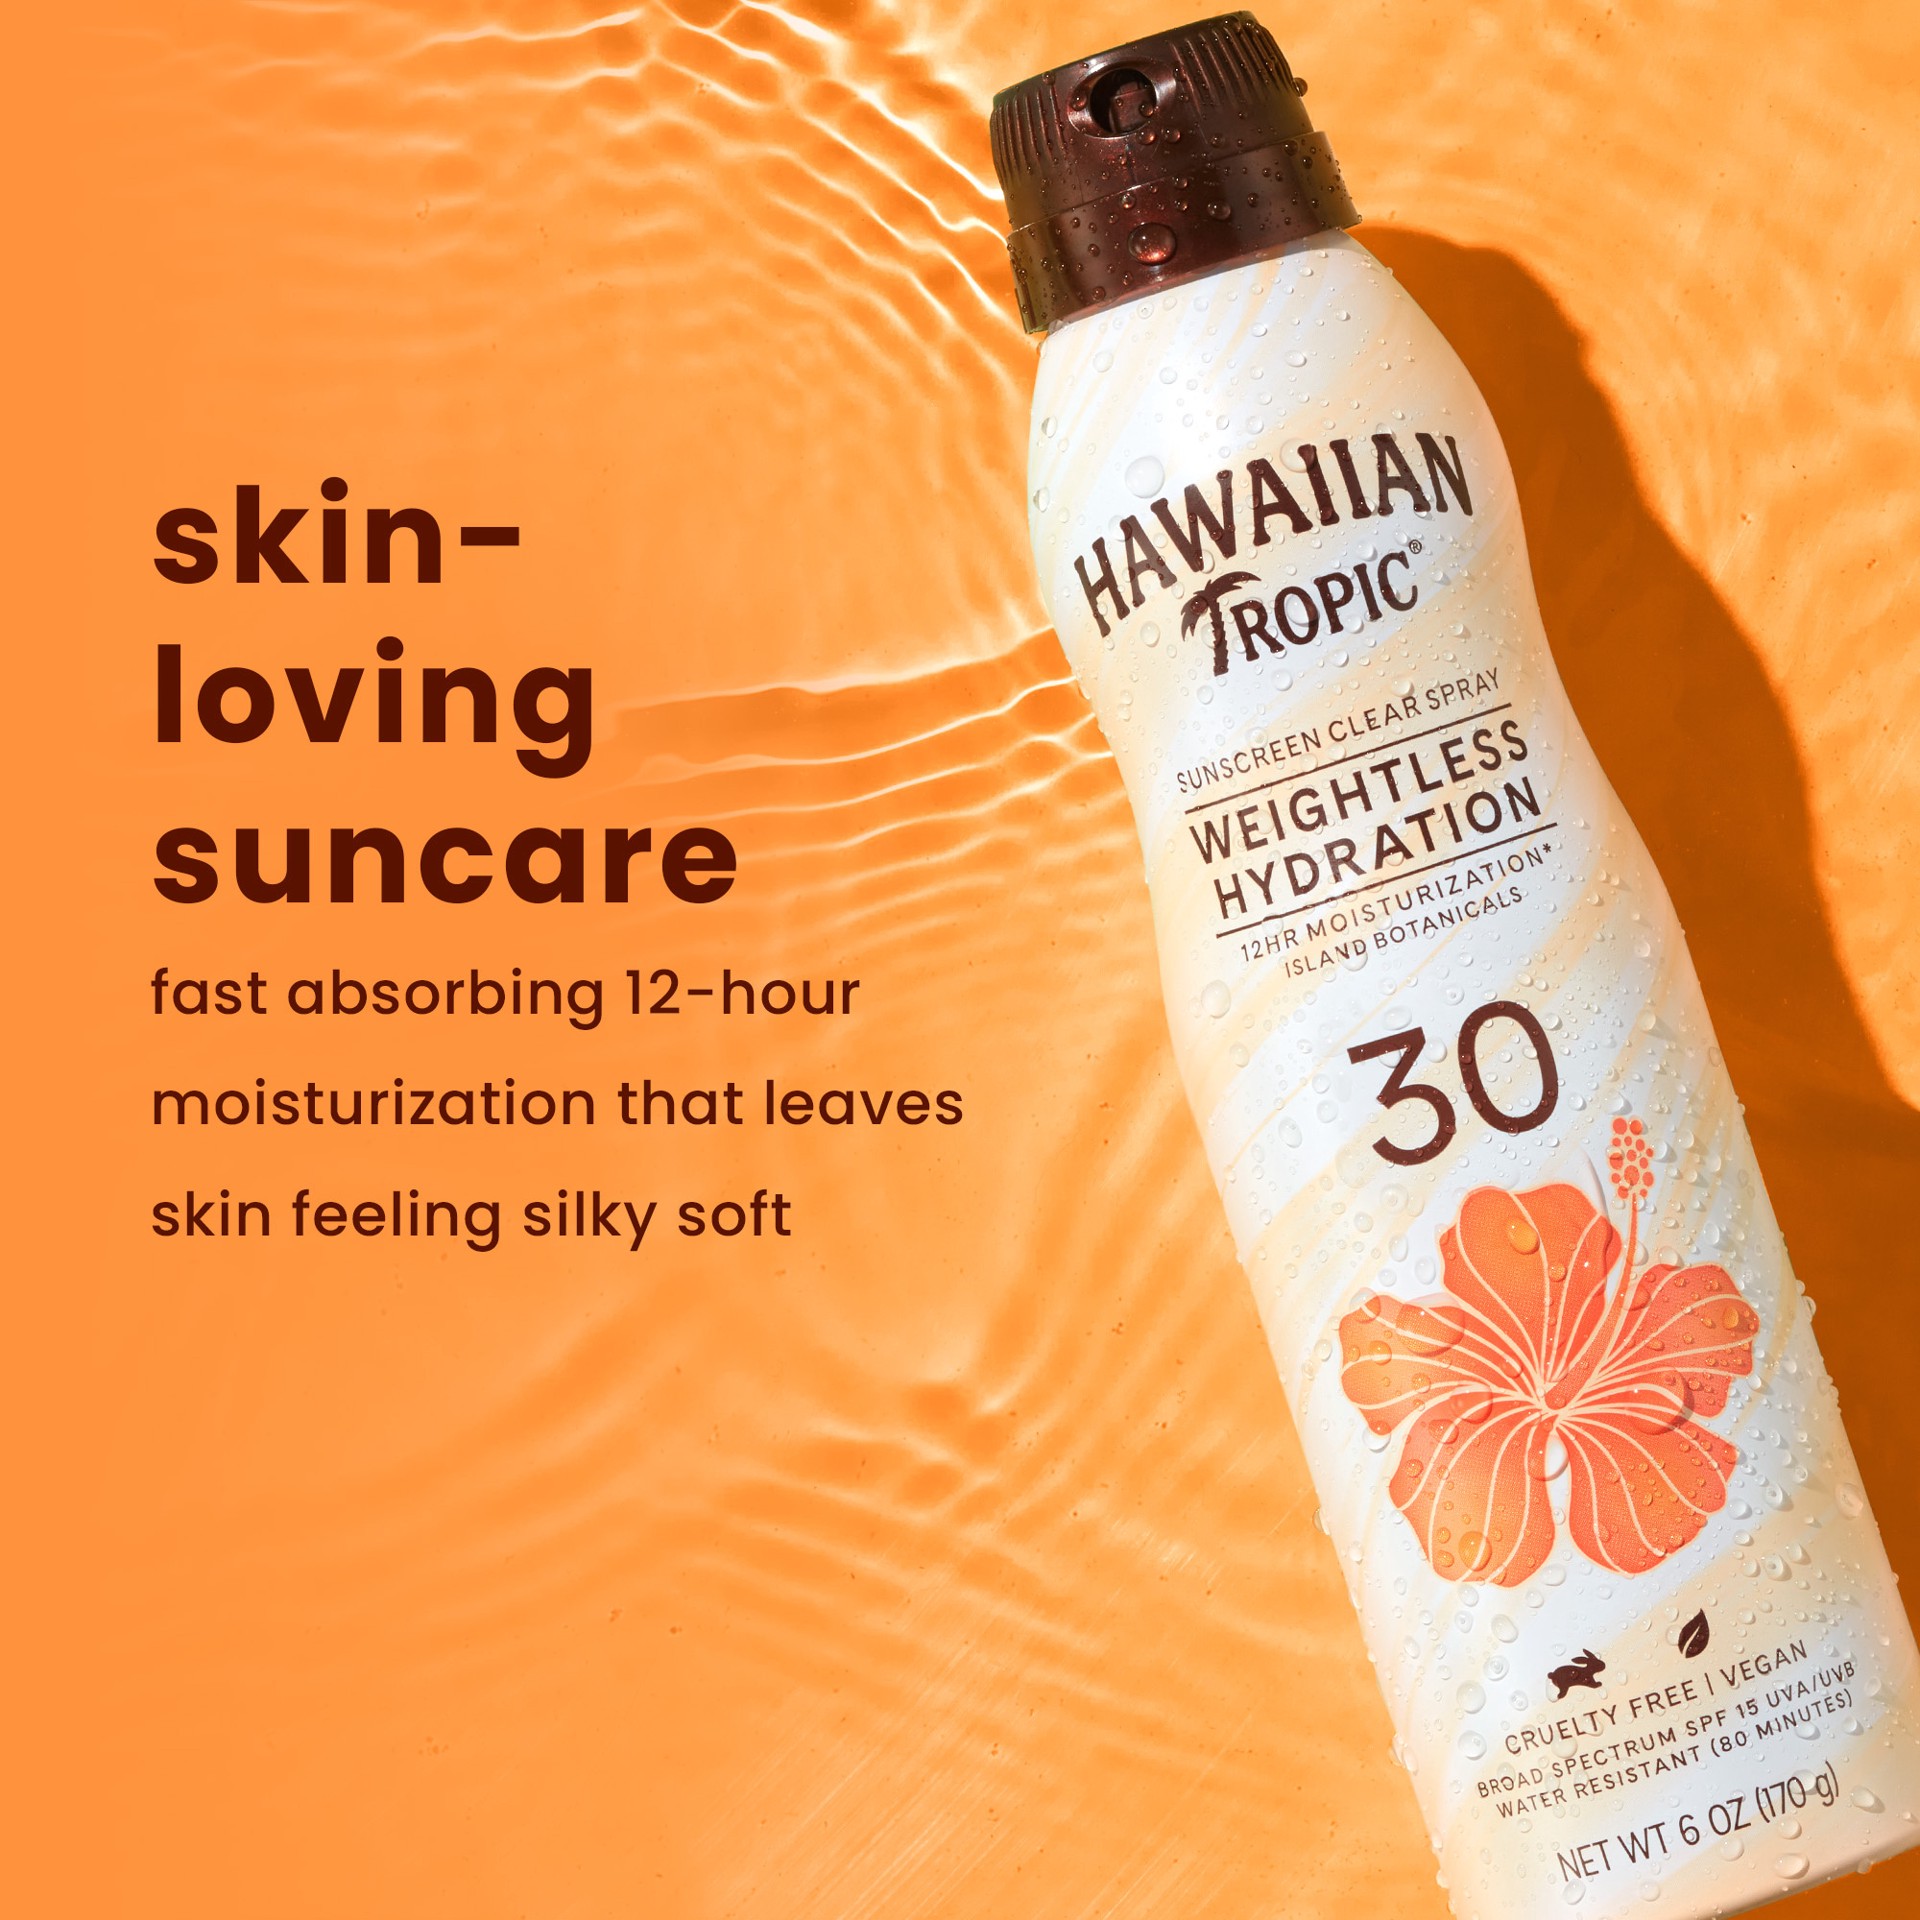 slide 7 of 8, Hawaiian Tropic Weightless Hydration Clear Spray Sunscreen, SPF 30, 6oz, 6 oz